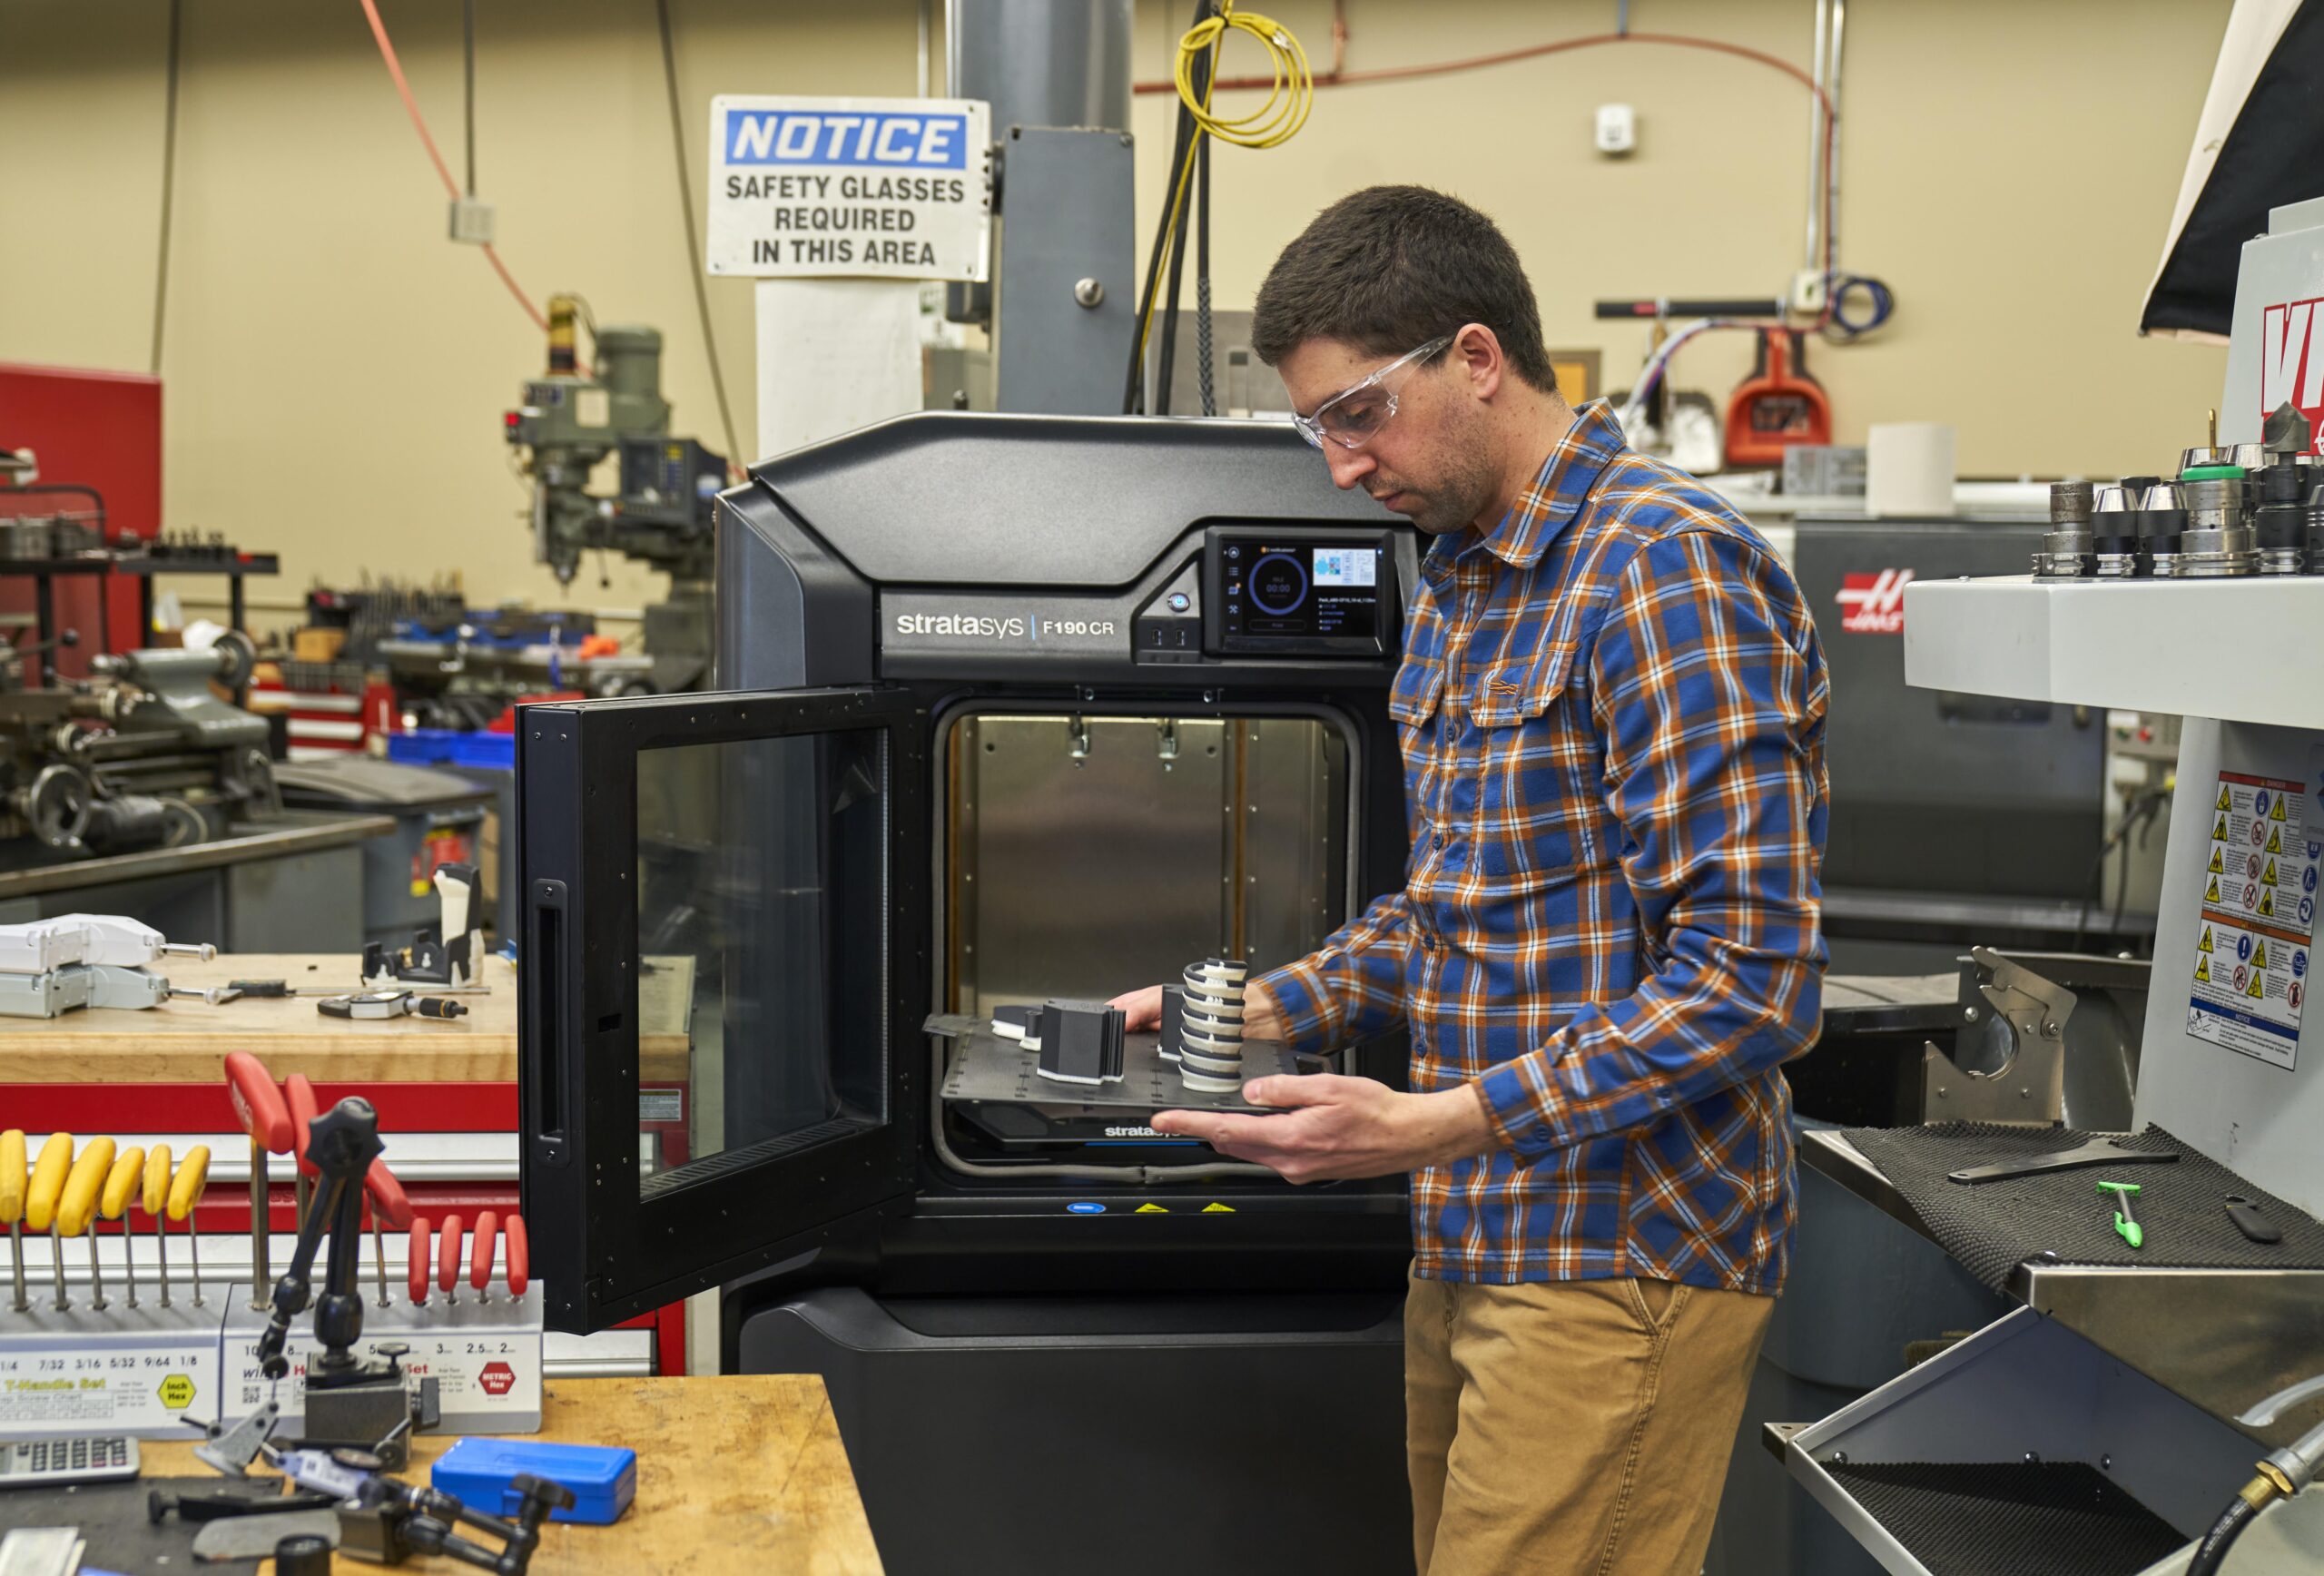 Haas CNC mill in job shop with Stratasys FDM 3D printer